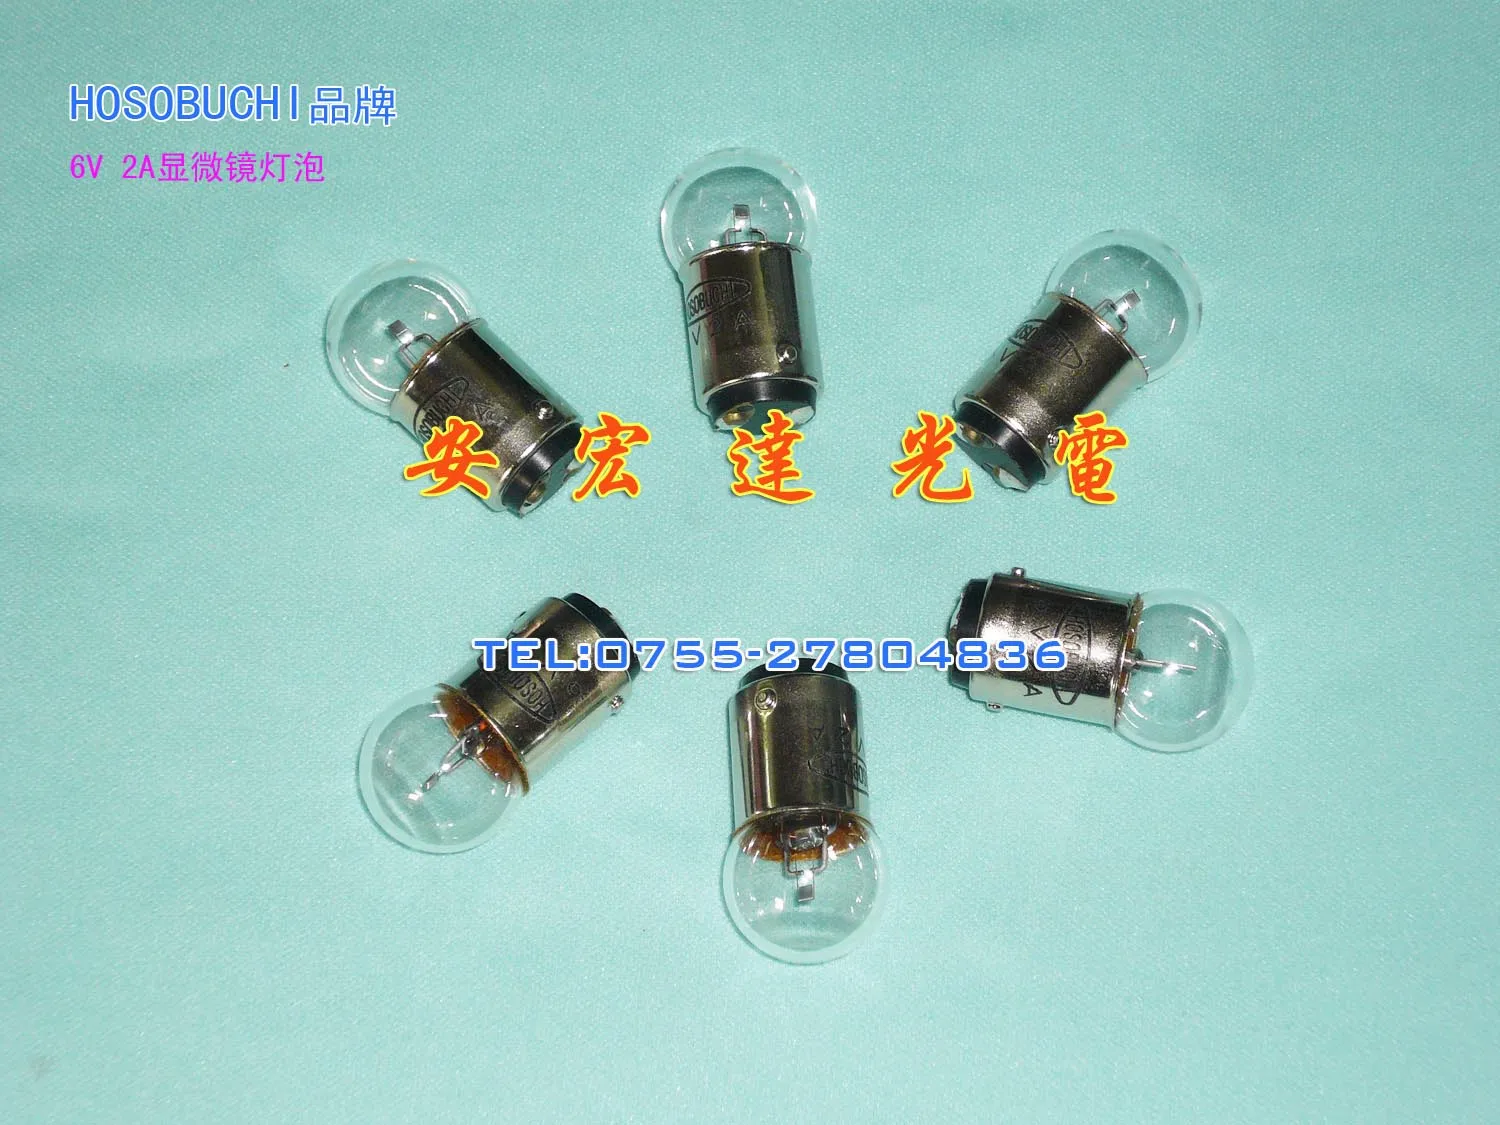 Hosobuchi Microscope Bulb Op2105k6v2a